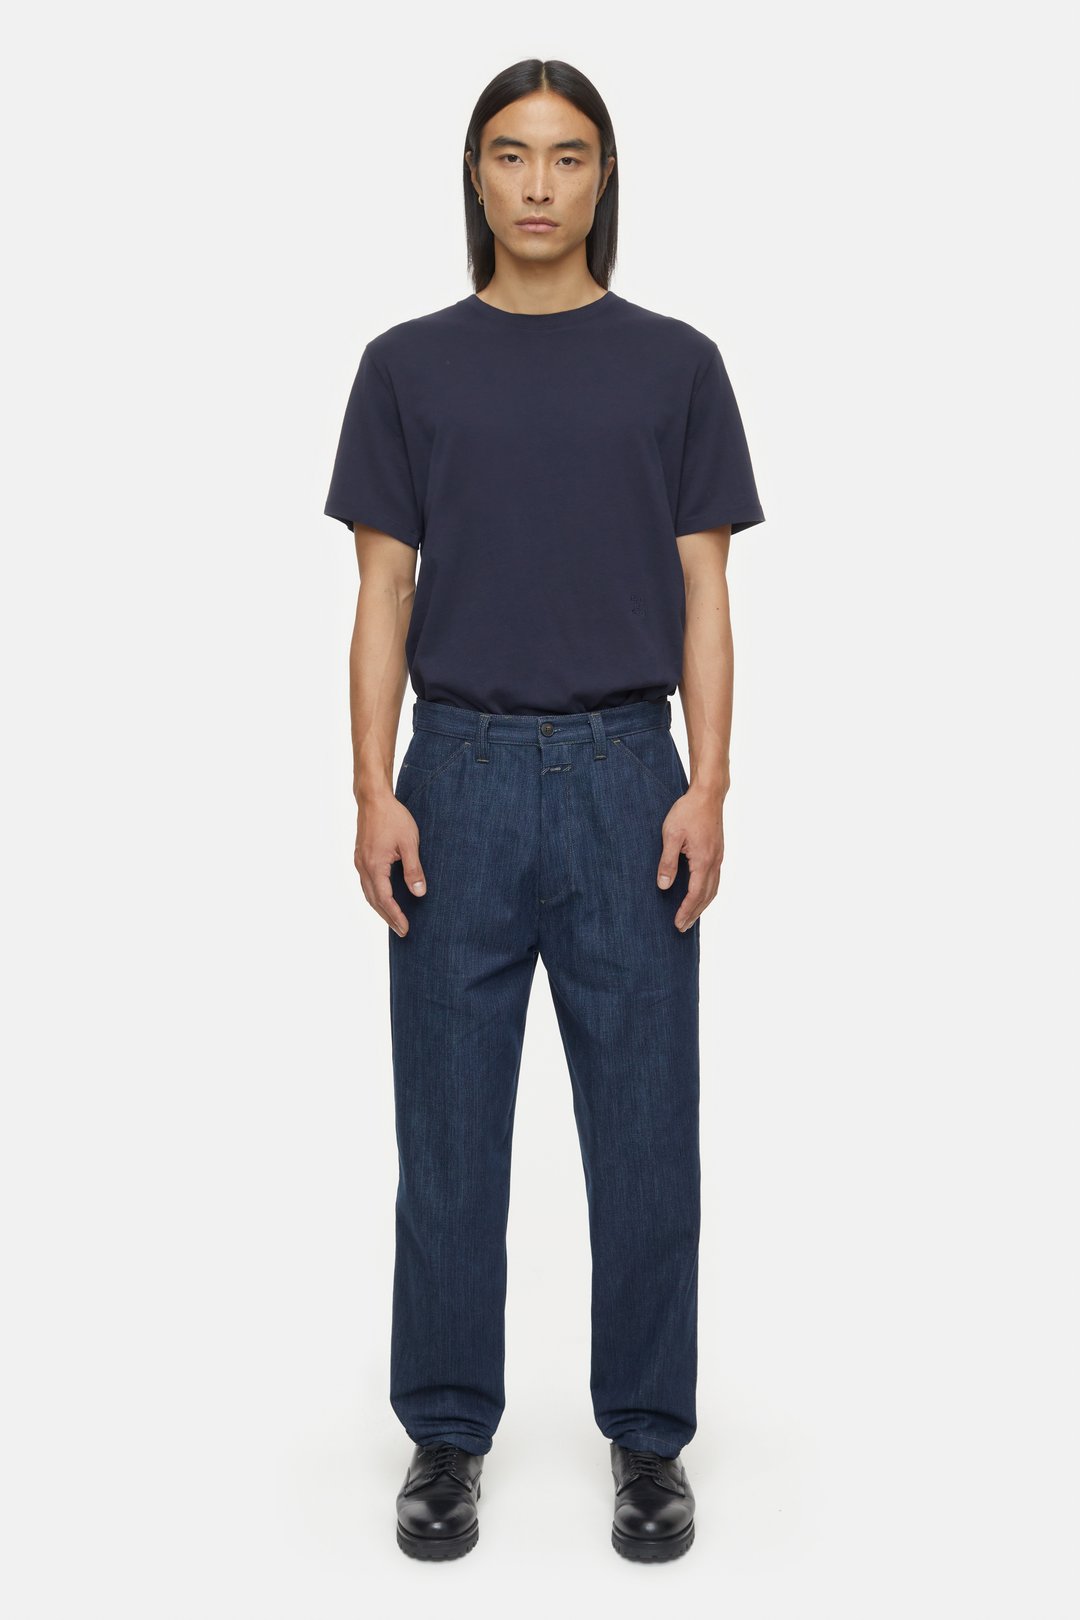 Men jeans denim pants fit types guideline Vector Image